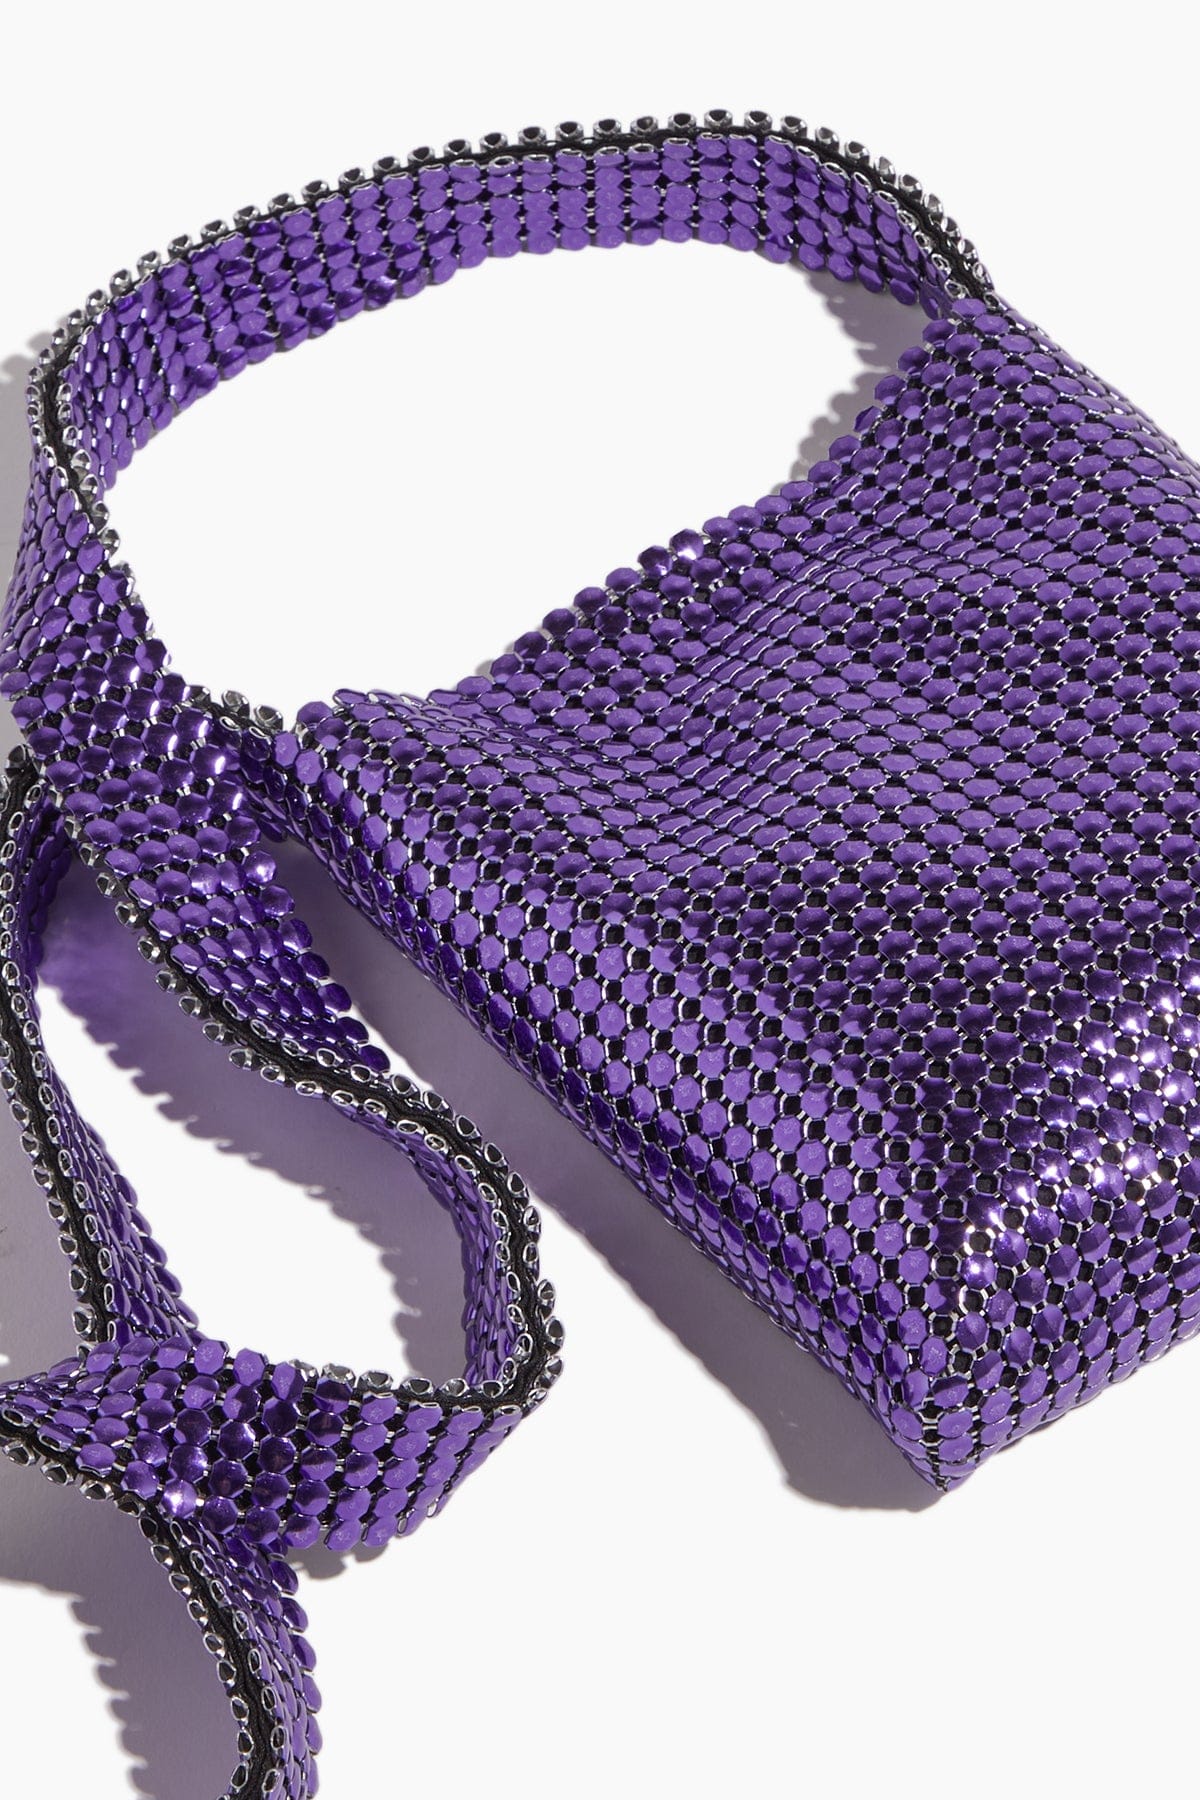 Paco Rabanne Cross Body Bags Pixel Mini Bag in Purple Paco Rabanne Pixel Mini Bag in Purple